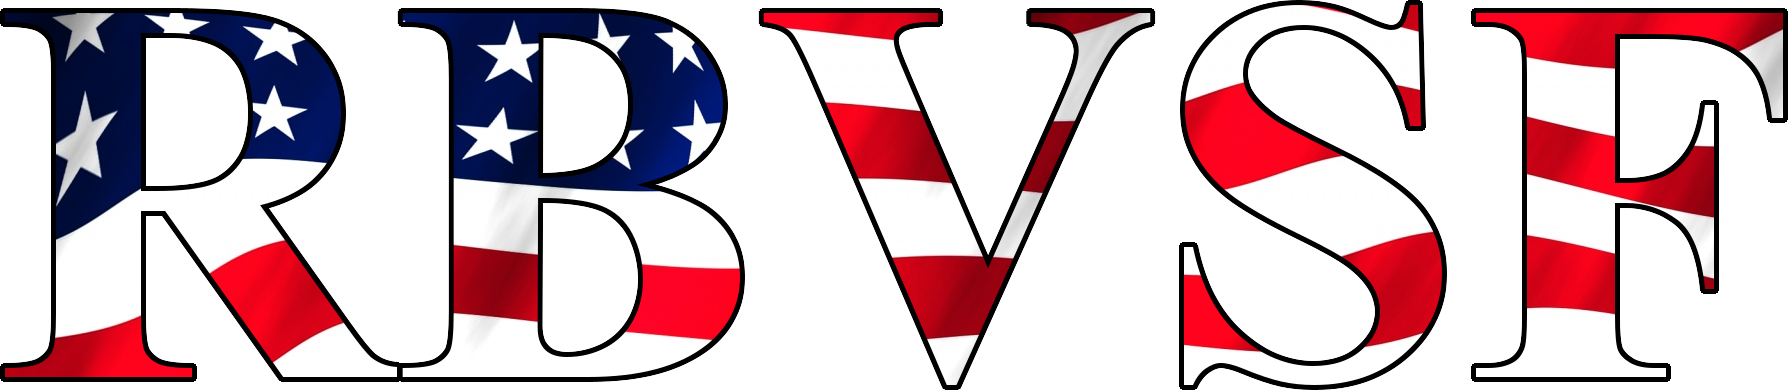 RBVSF Logo